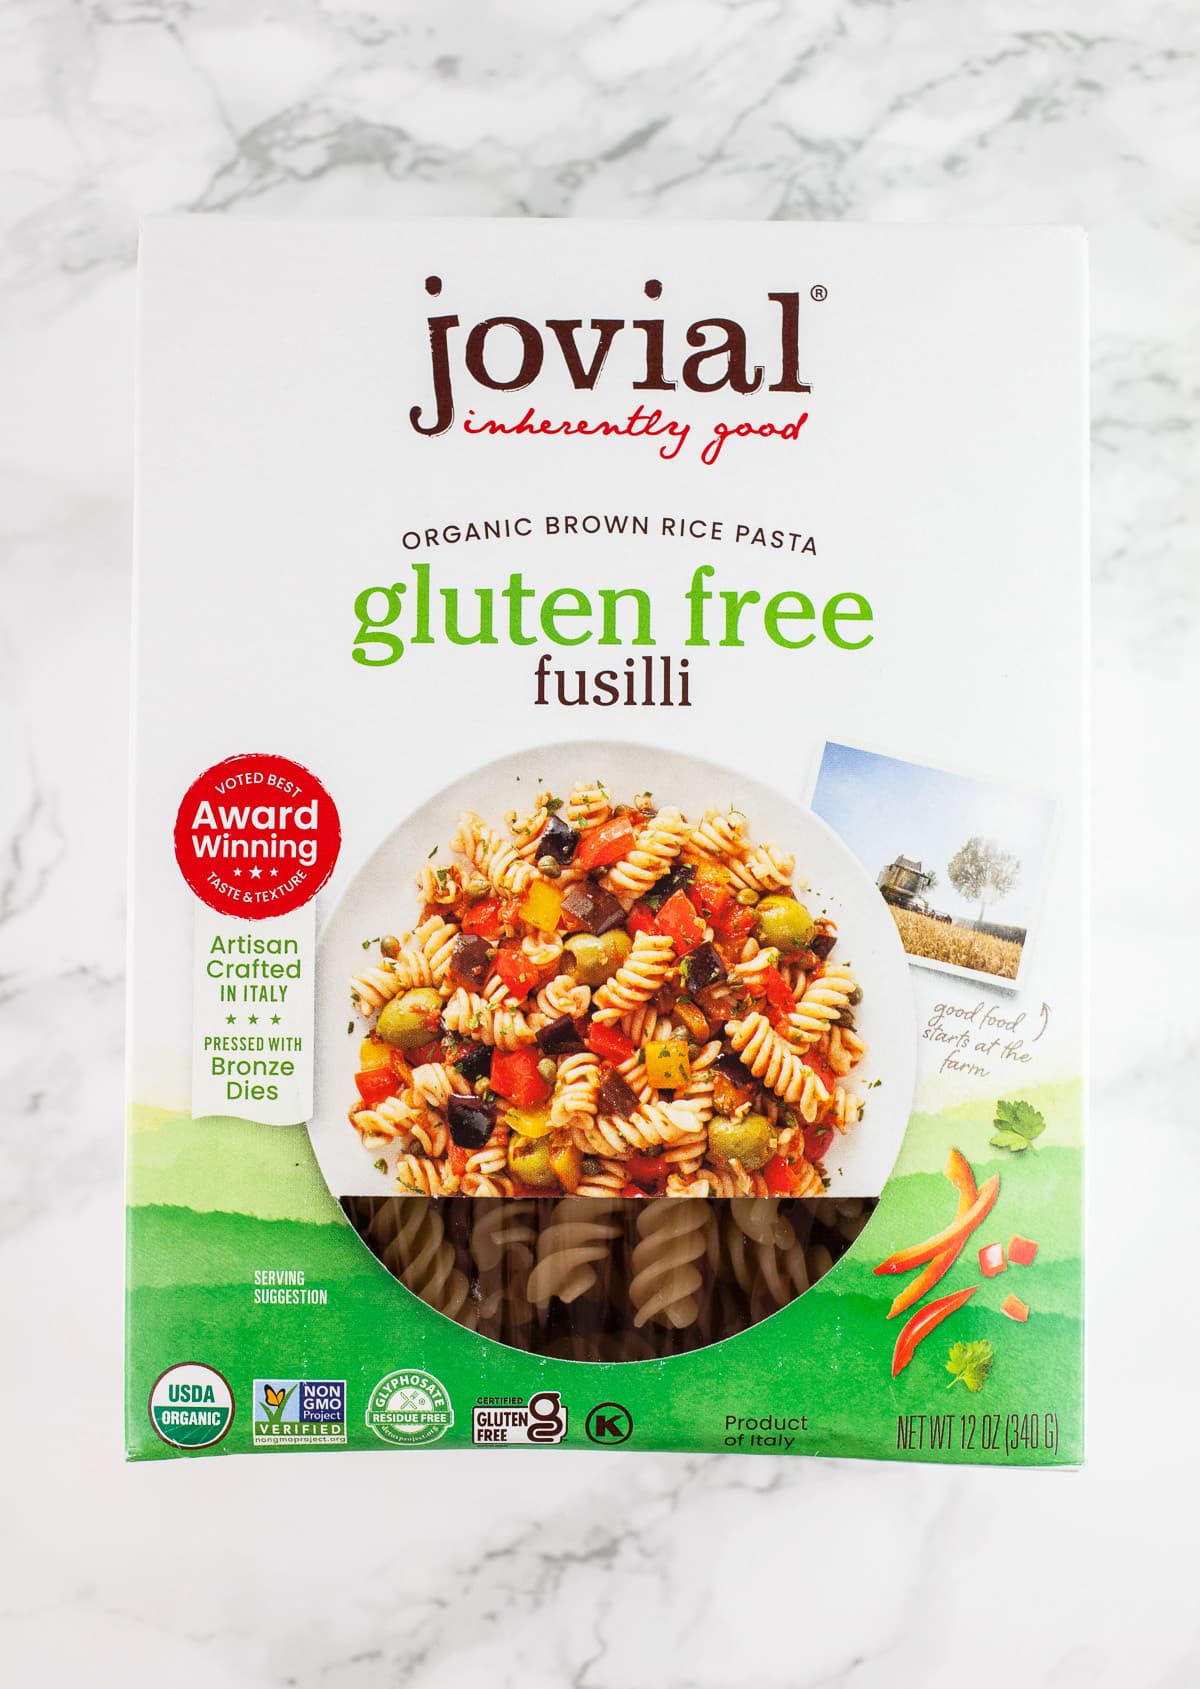 Box of Jovial gluten free fusilli pasta.